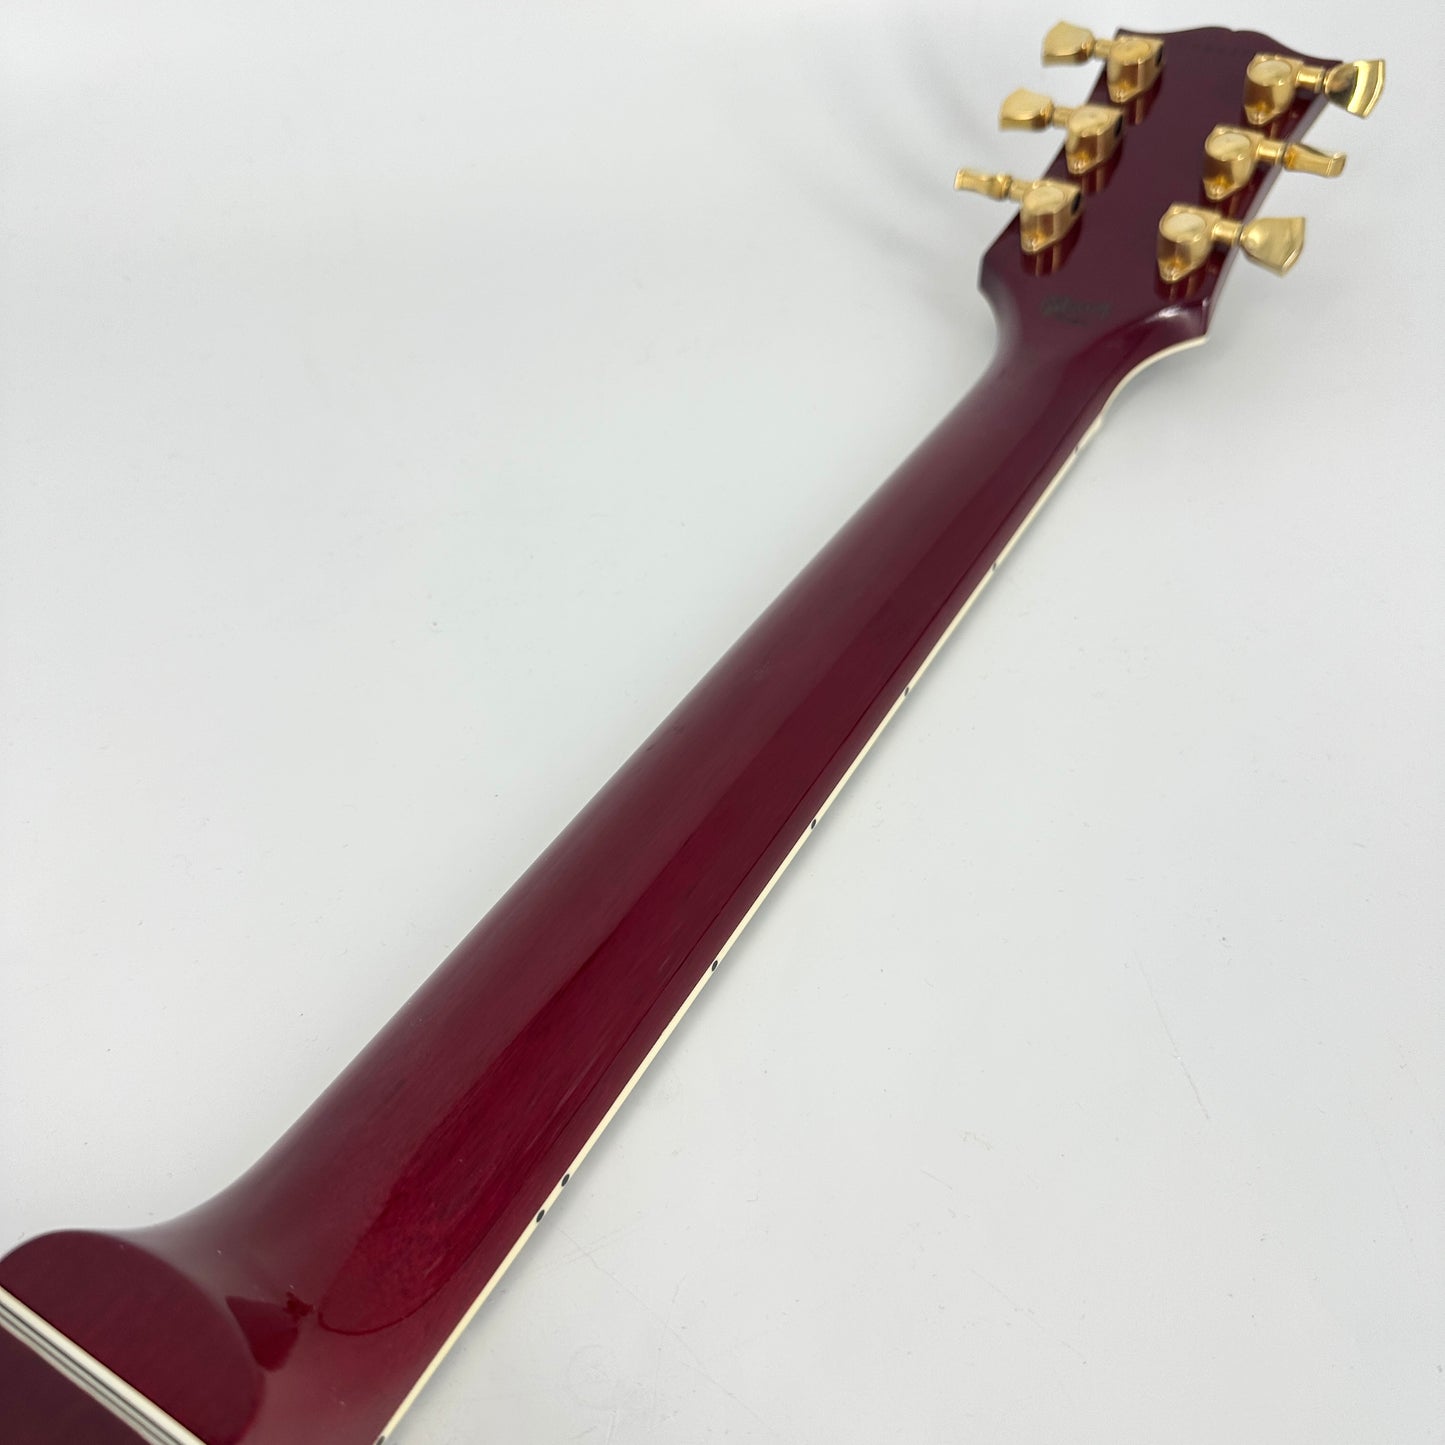 2008 Gibson Les Paul Custom – Heritage Cherry Sunburst